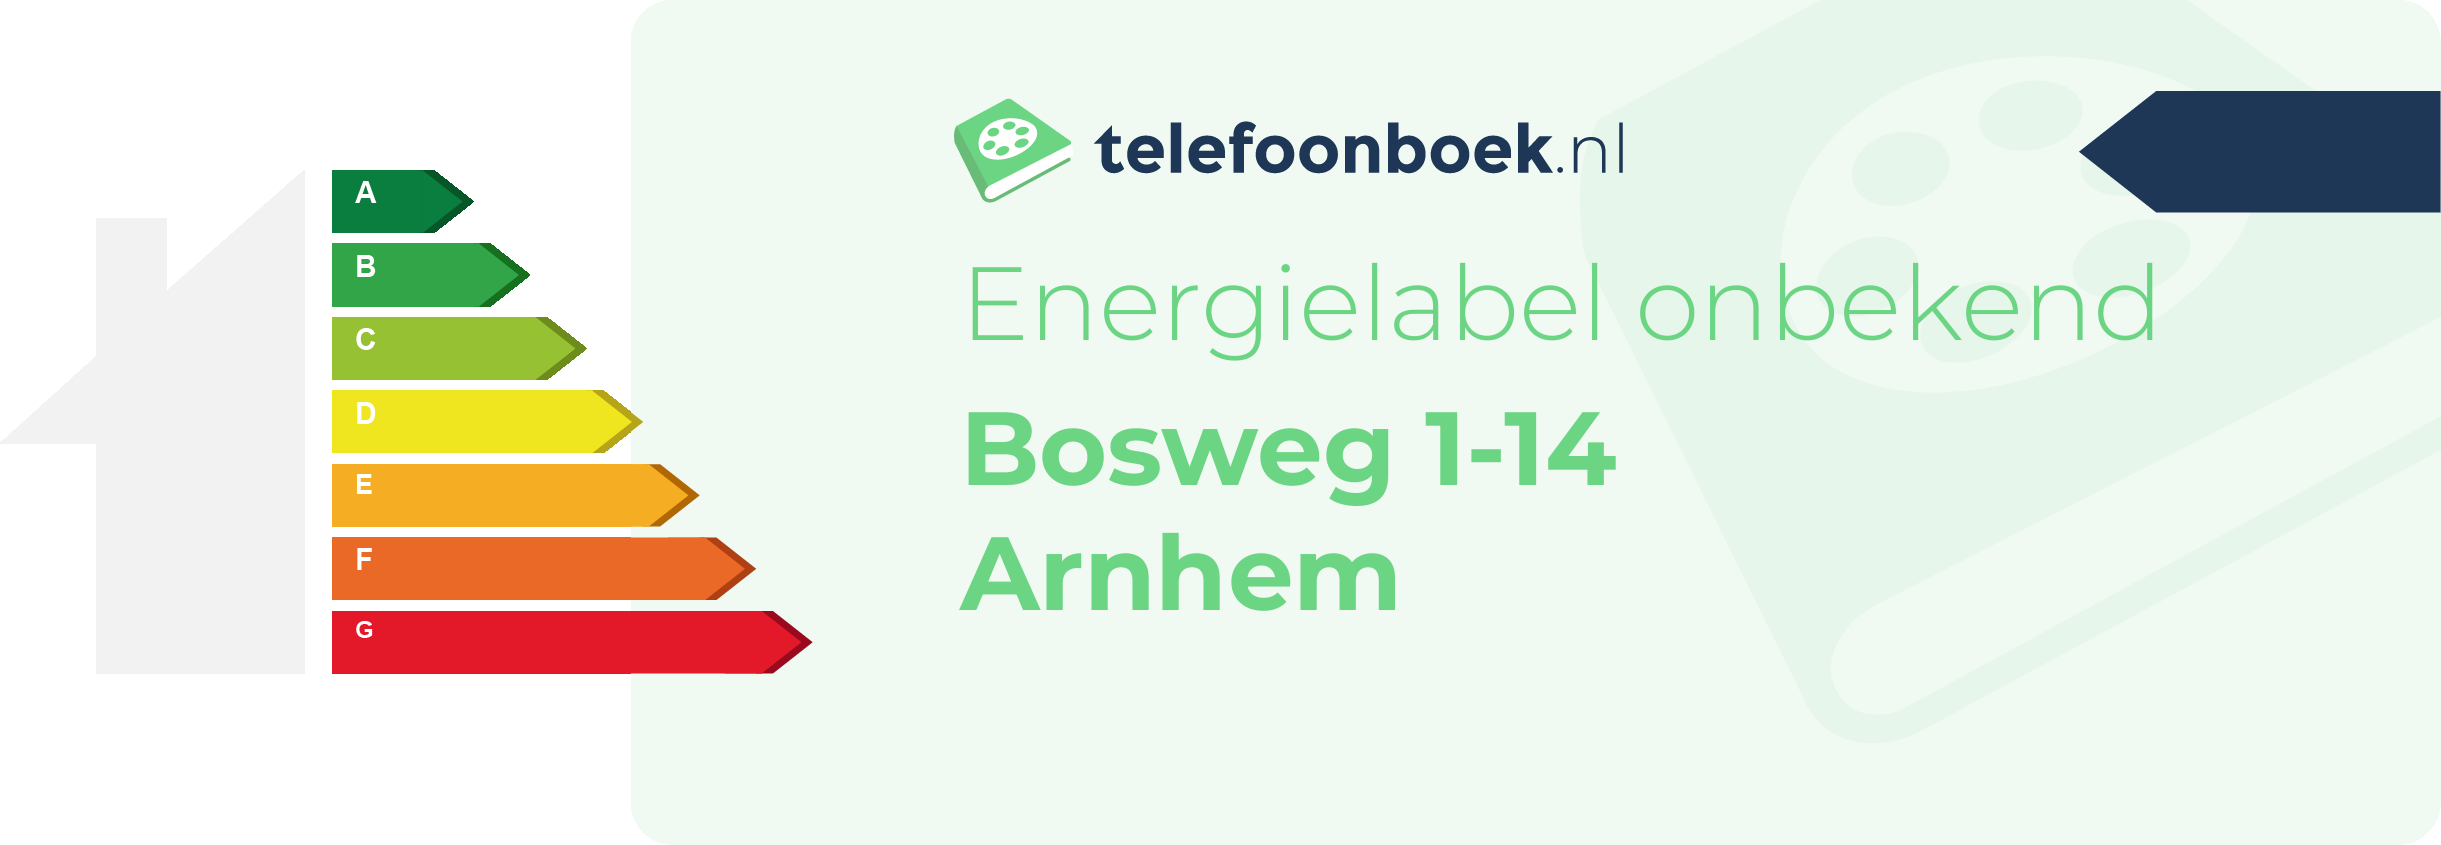 Energielabel Bosweg 1-14 Arnhem